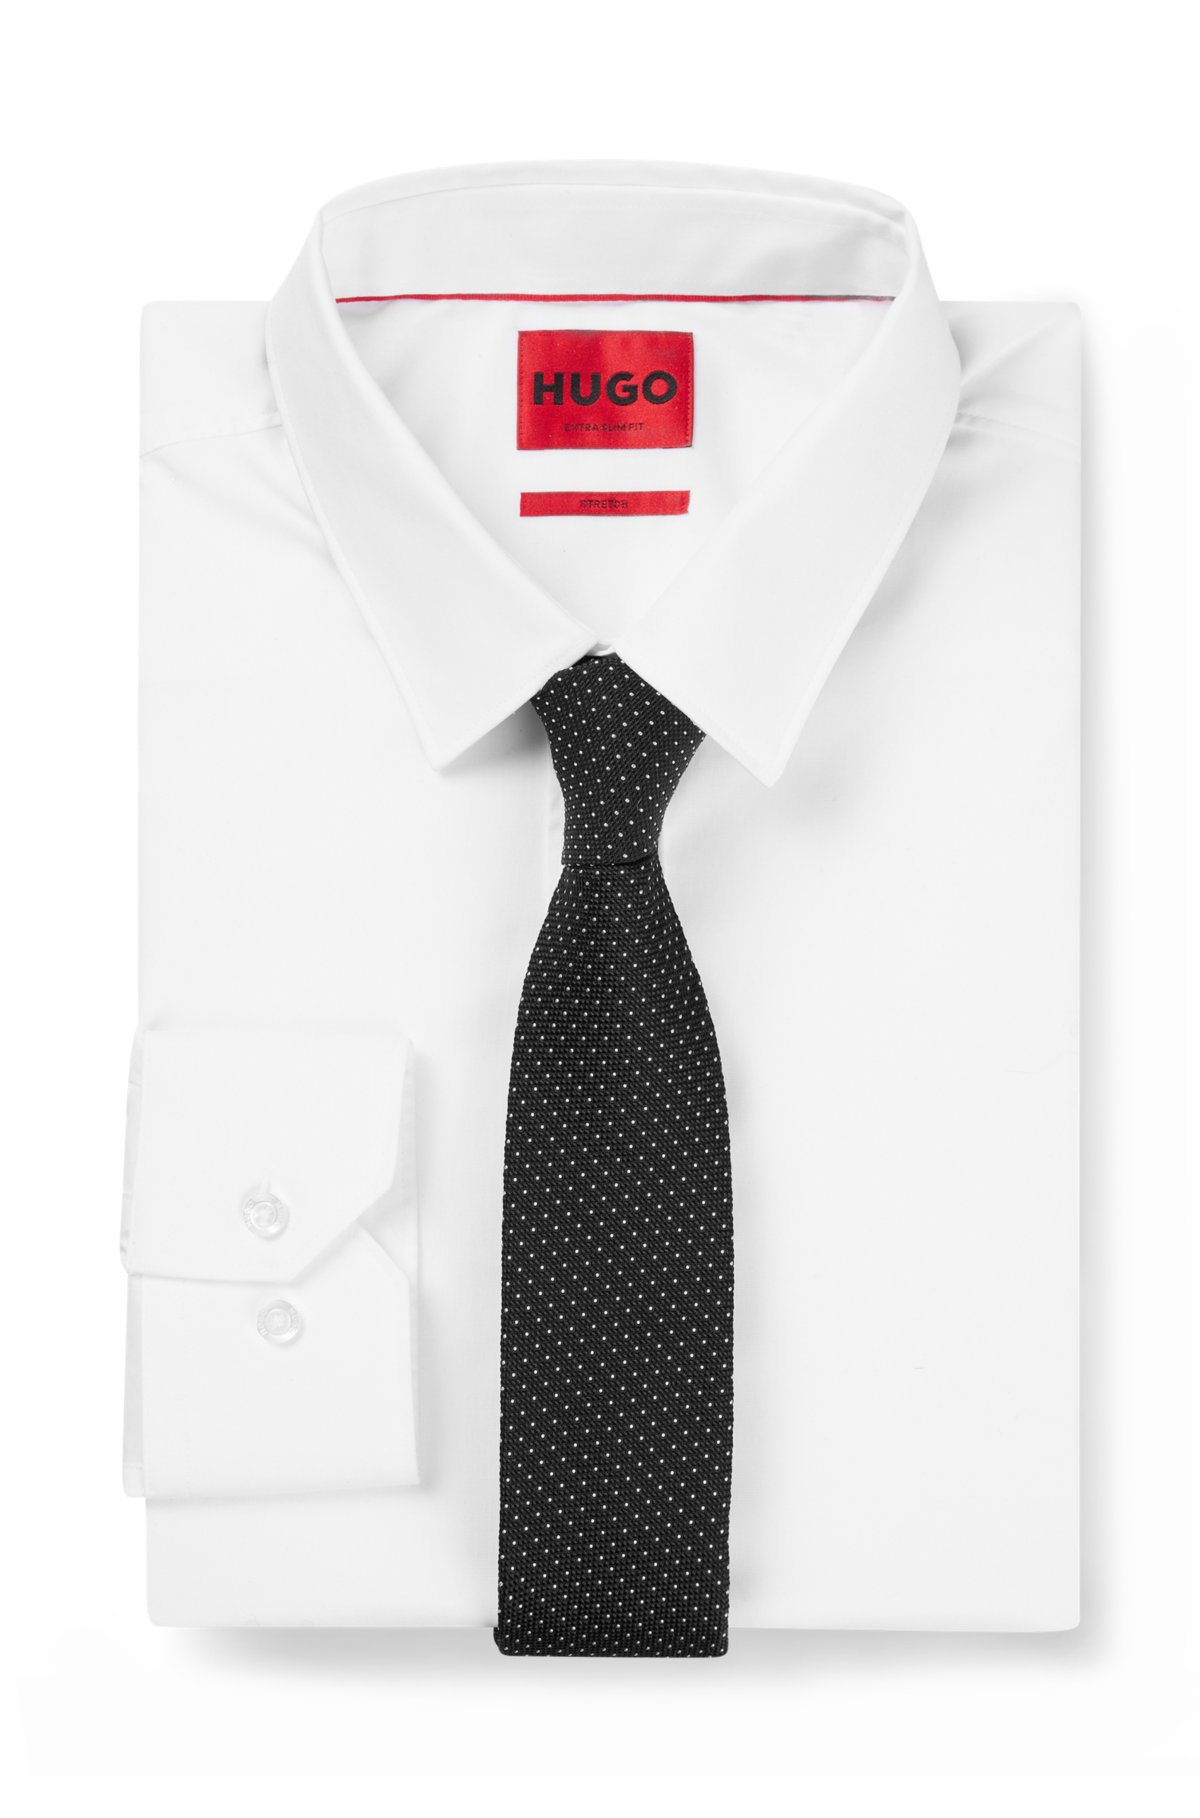 aus mit HUGO Seide reiner - Krawatte Jacquard-Muster